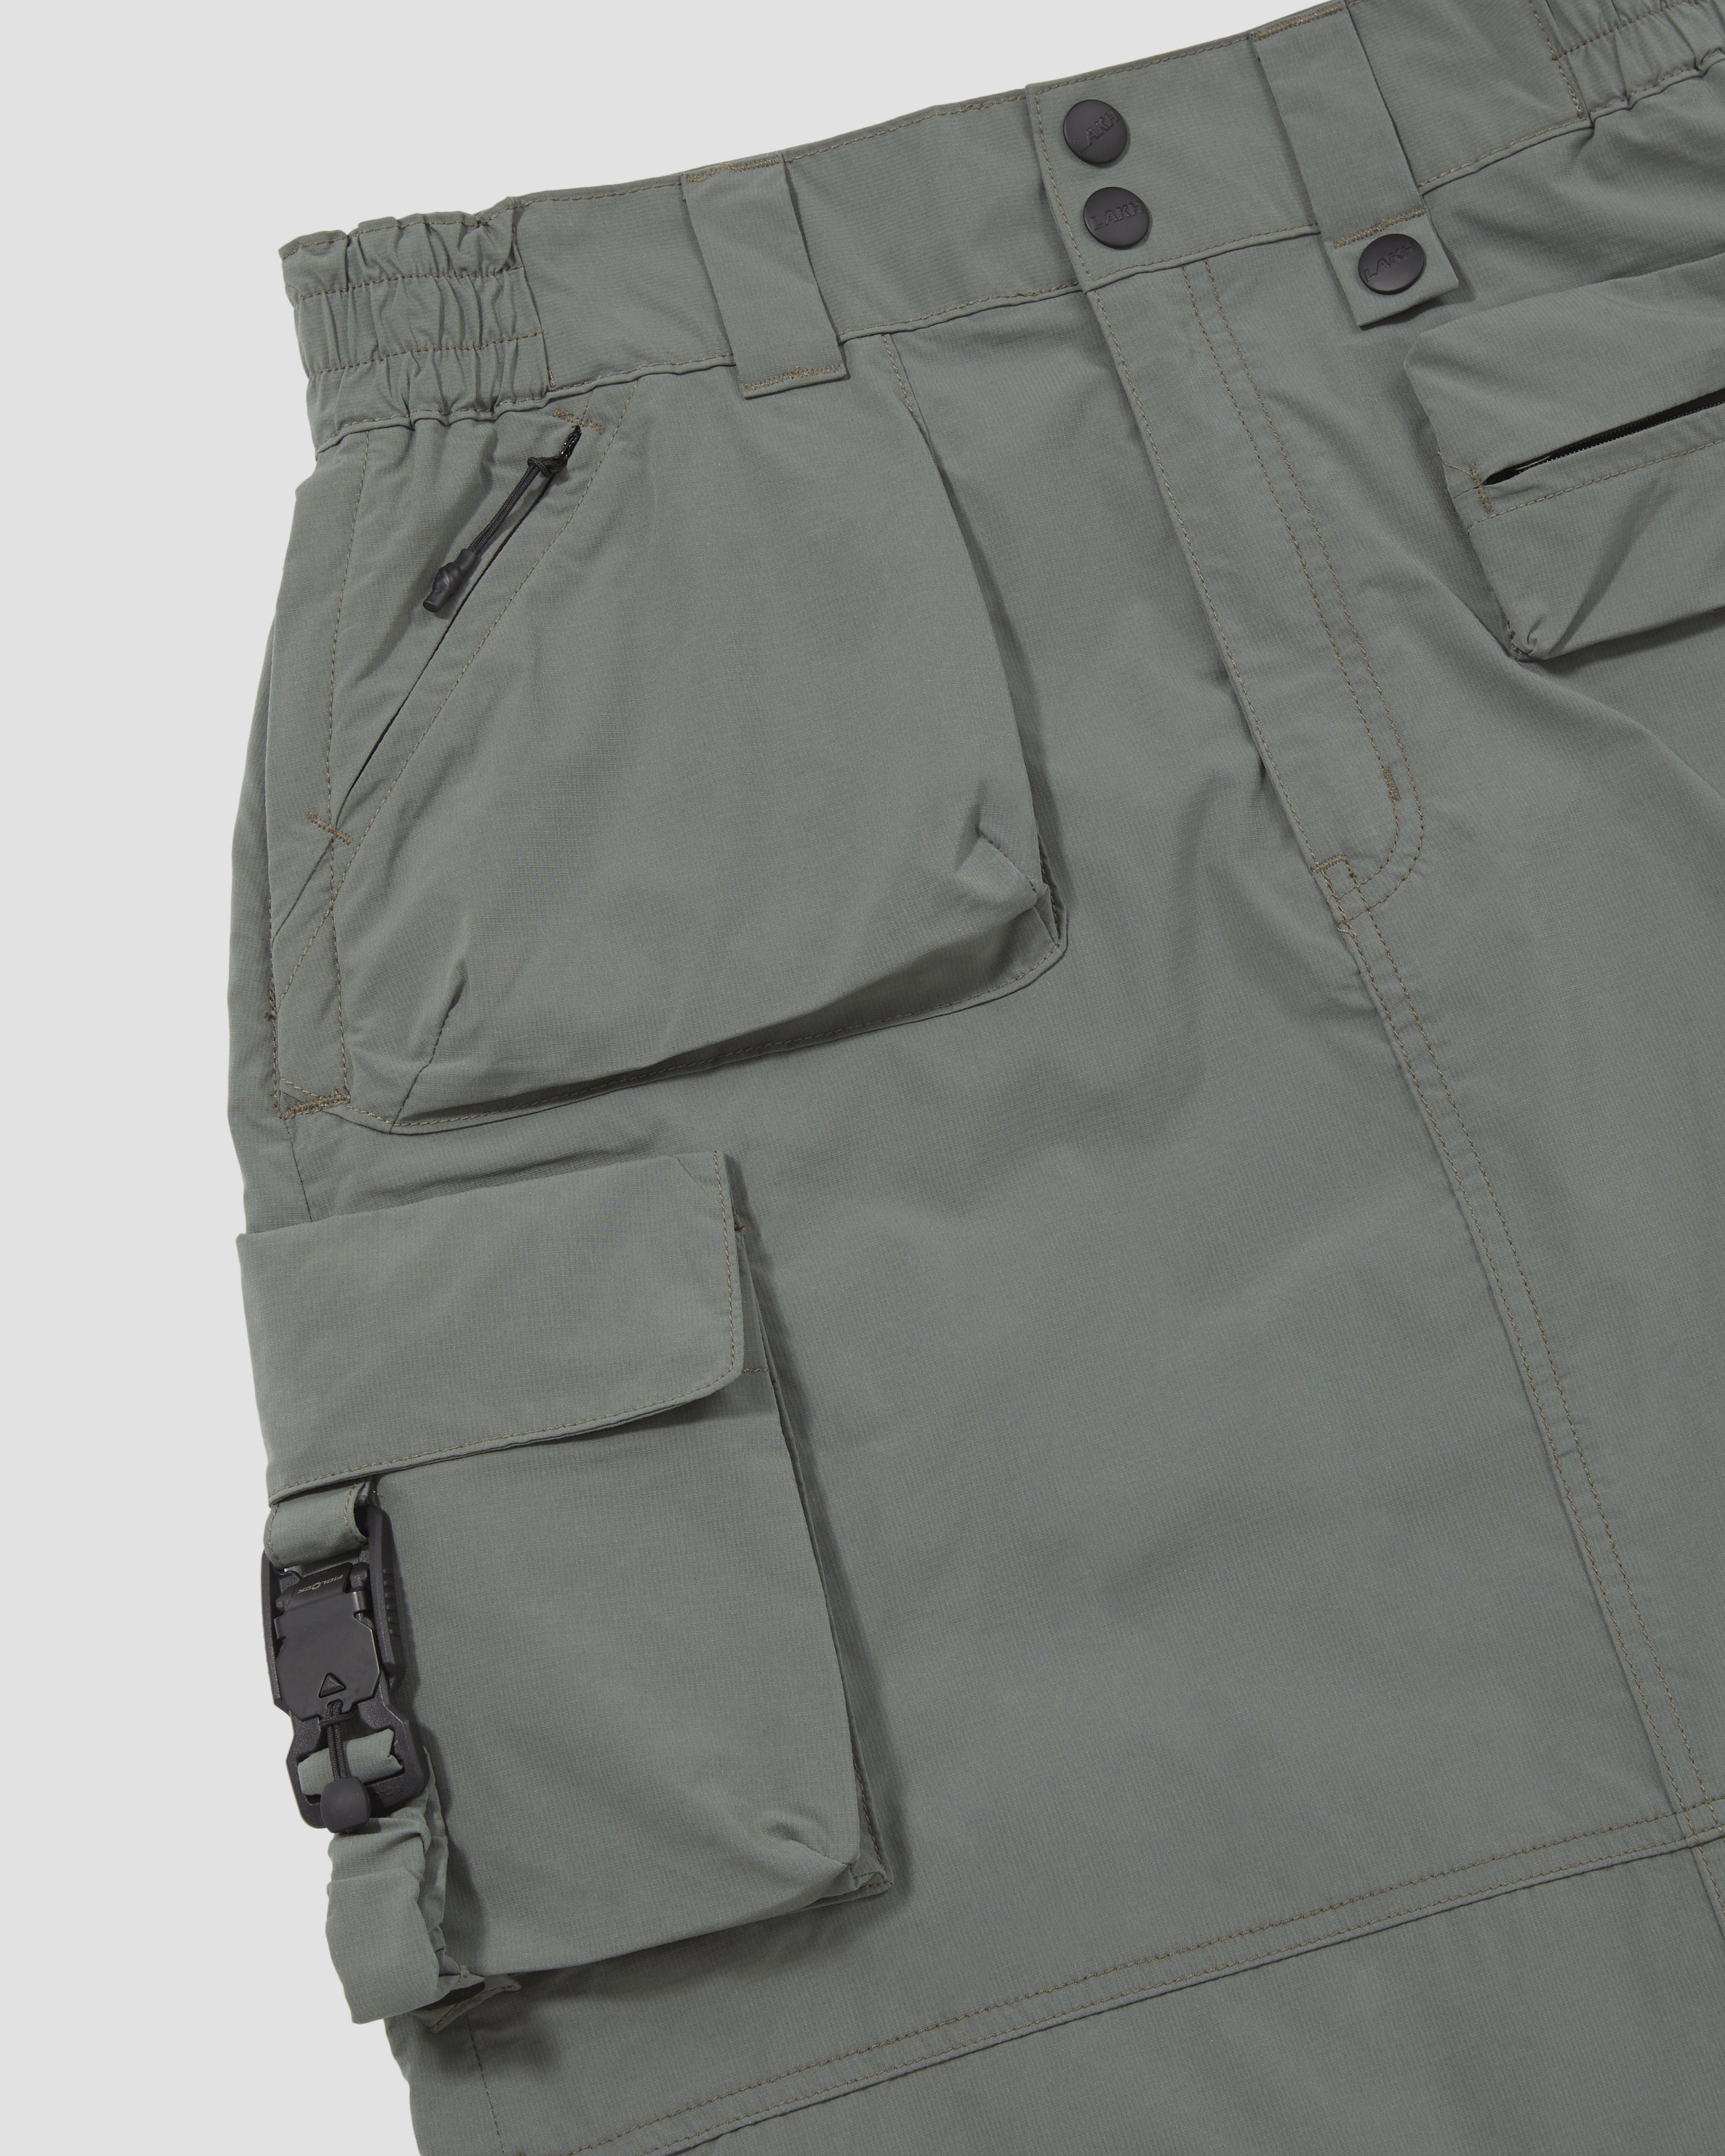 Functional Ten Pockets Skirt - Grey